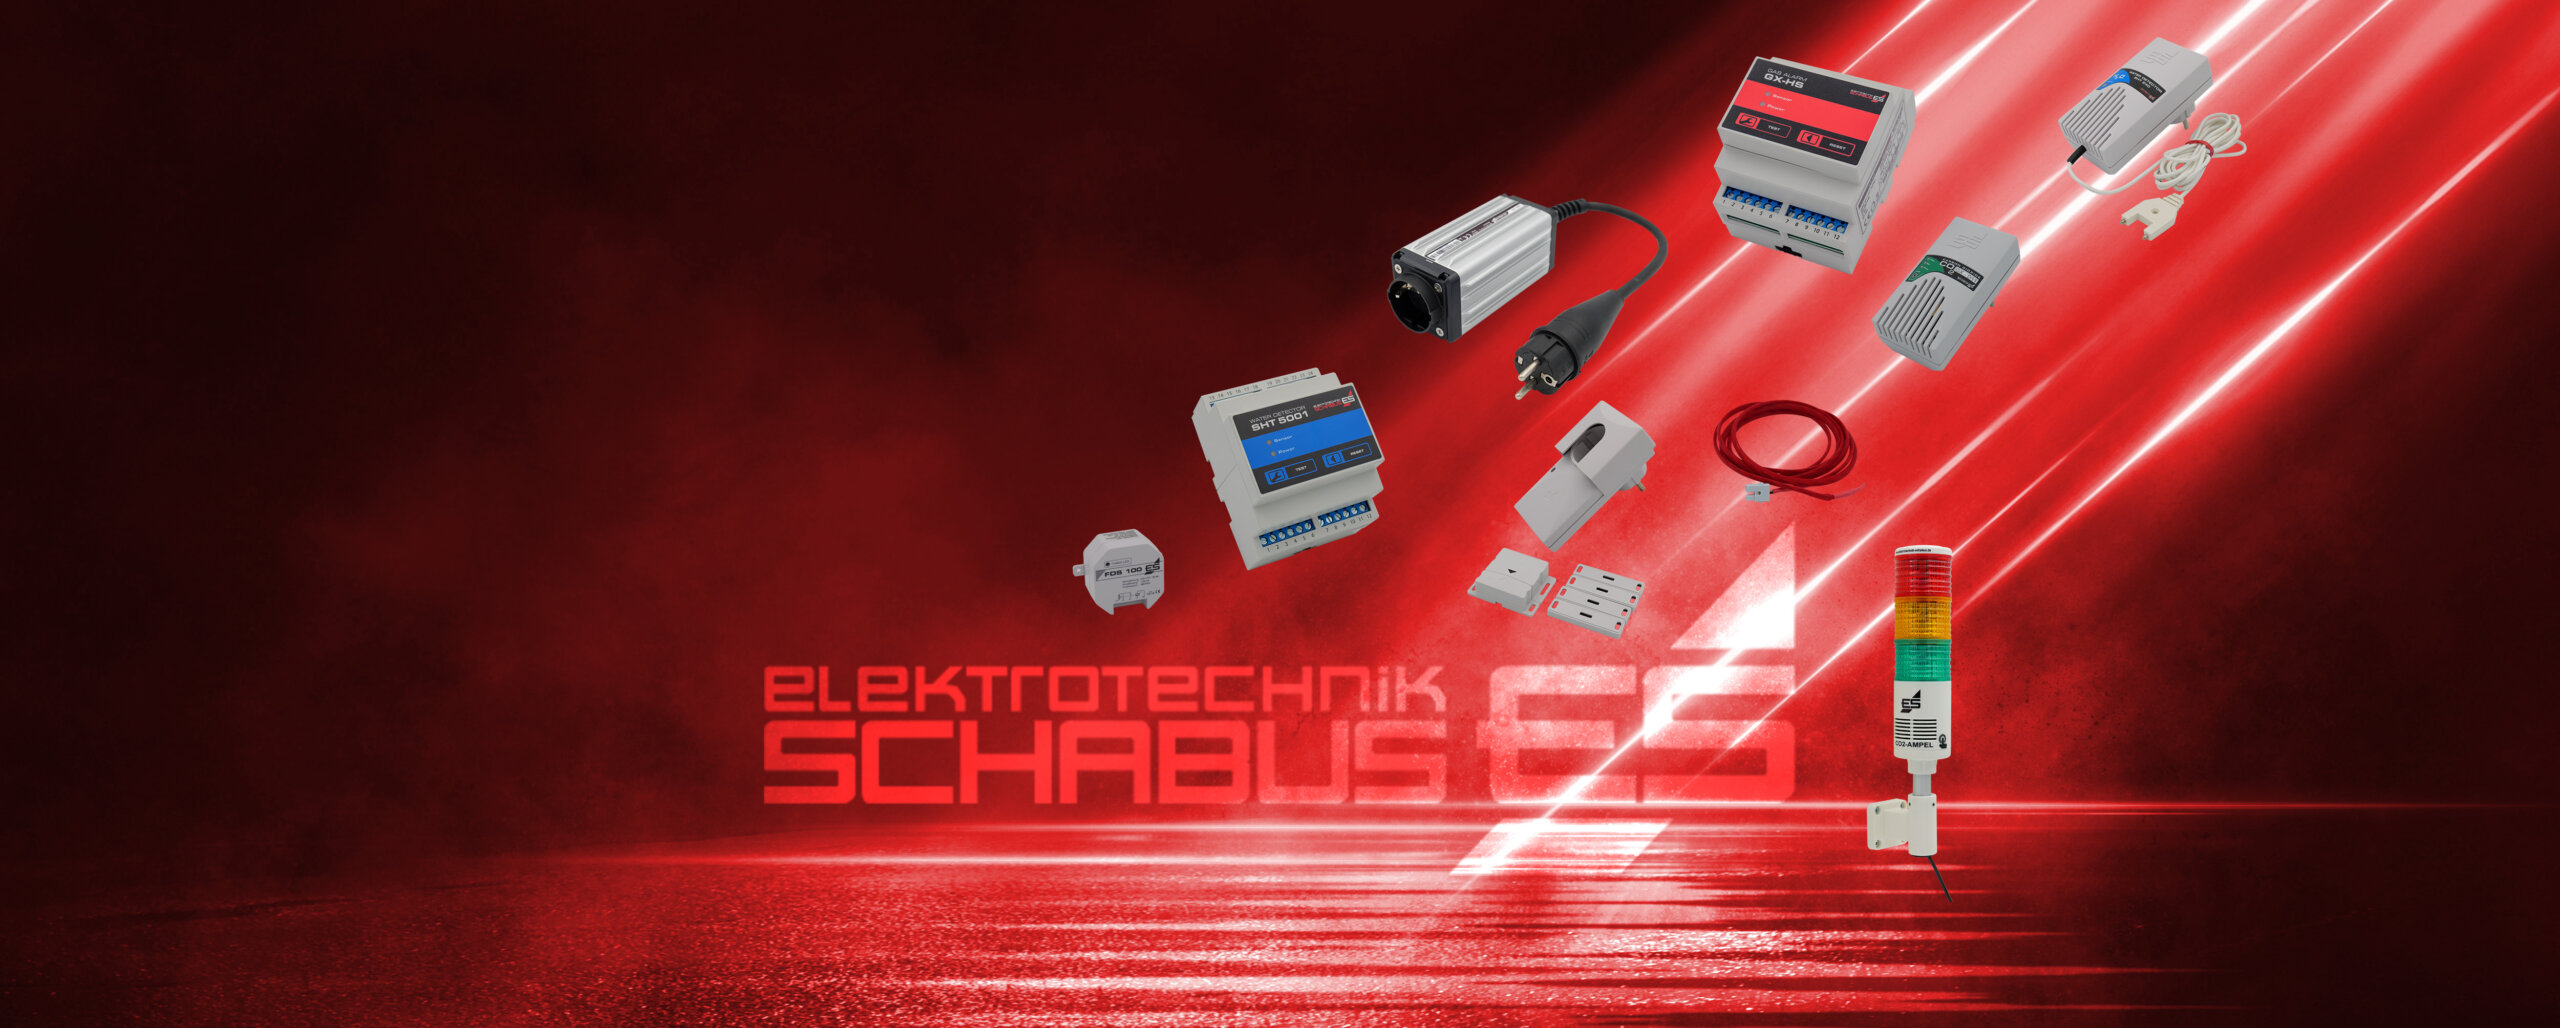 (c) Elektrotechnik-schabus.de